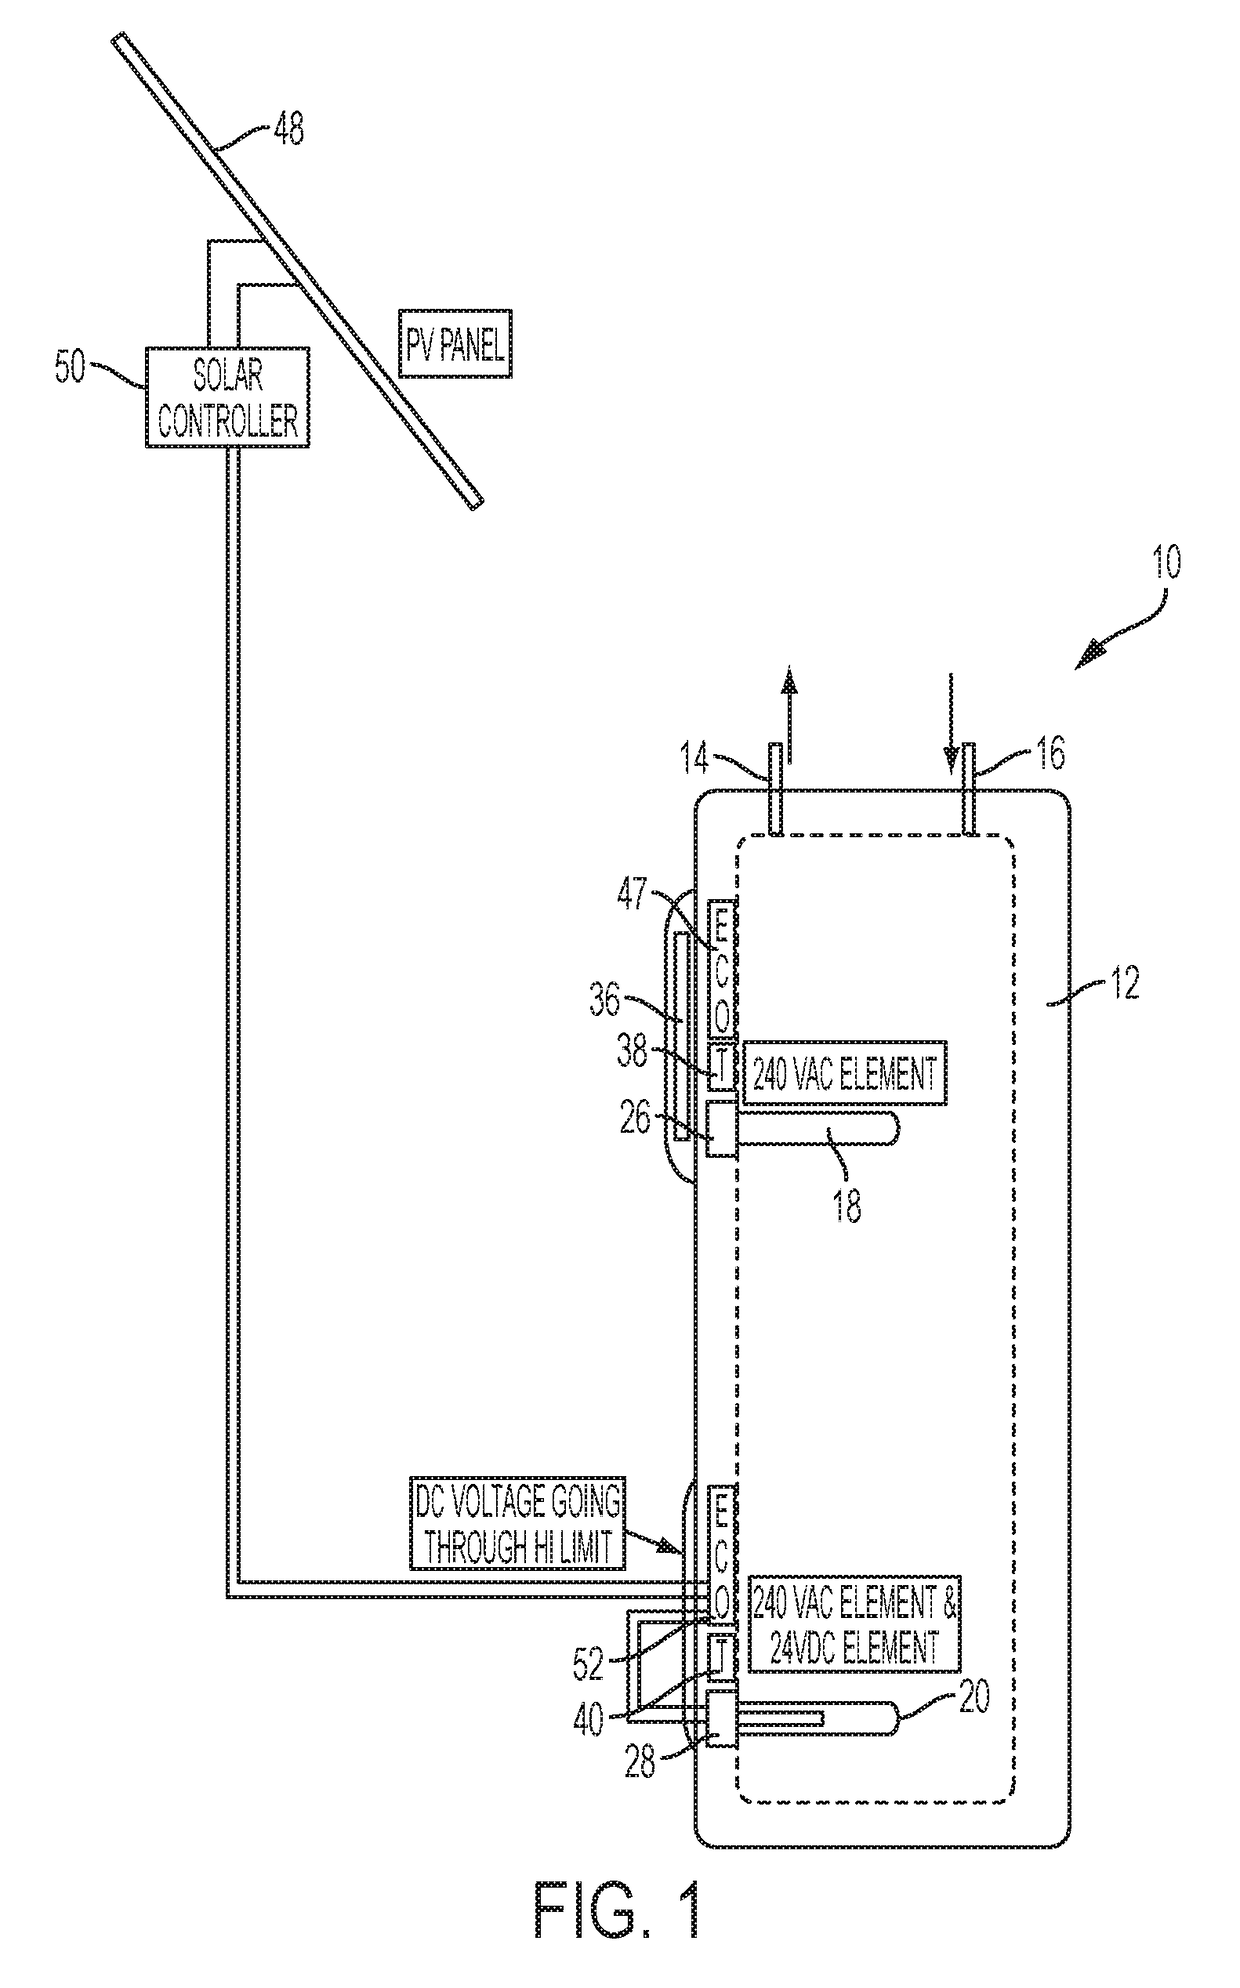 Water heater having a supplemental photovoltaic heating arrangement